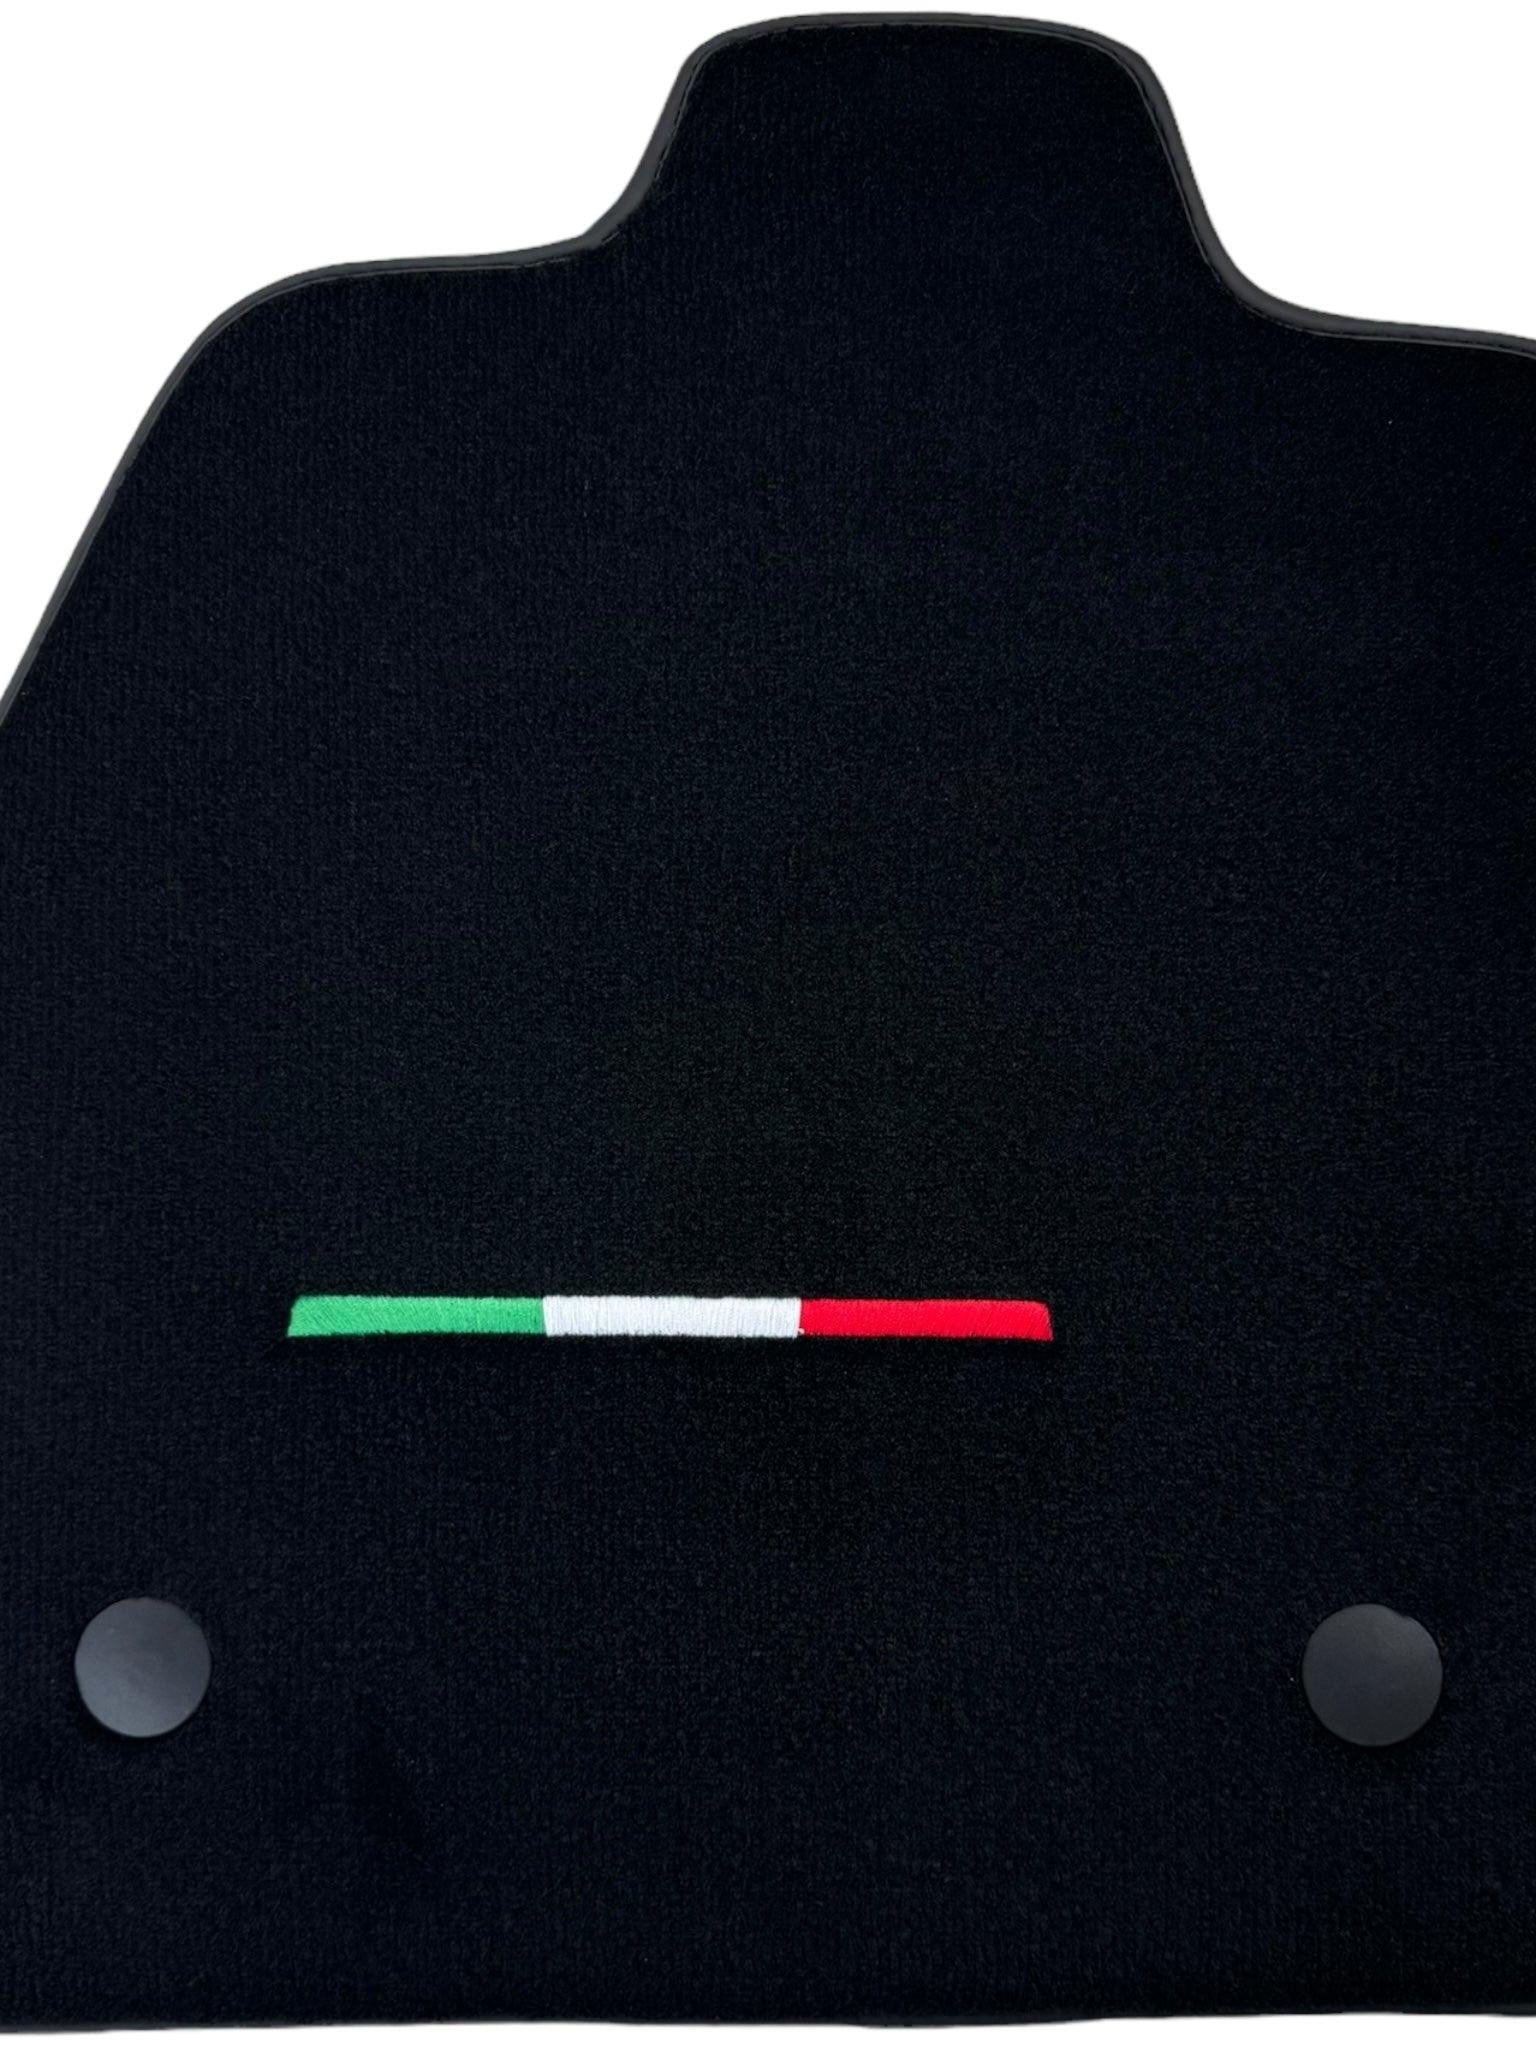 Black Floor Mats For Maserati MC20 (2020-2023) Italy Edition - AutoWin